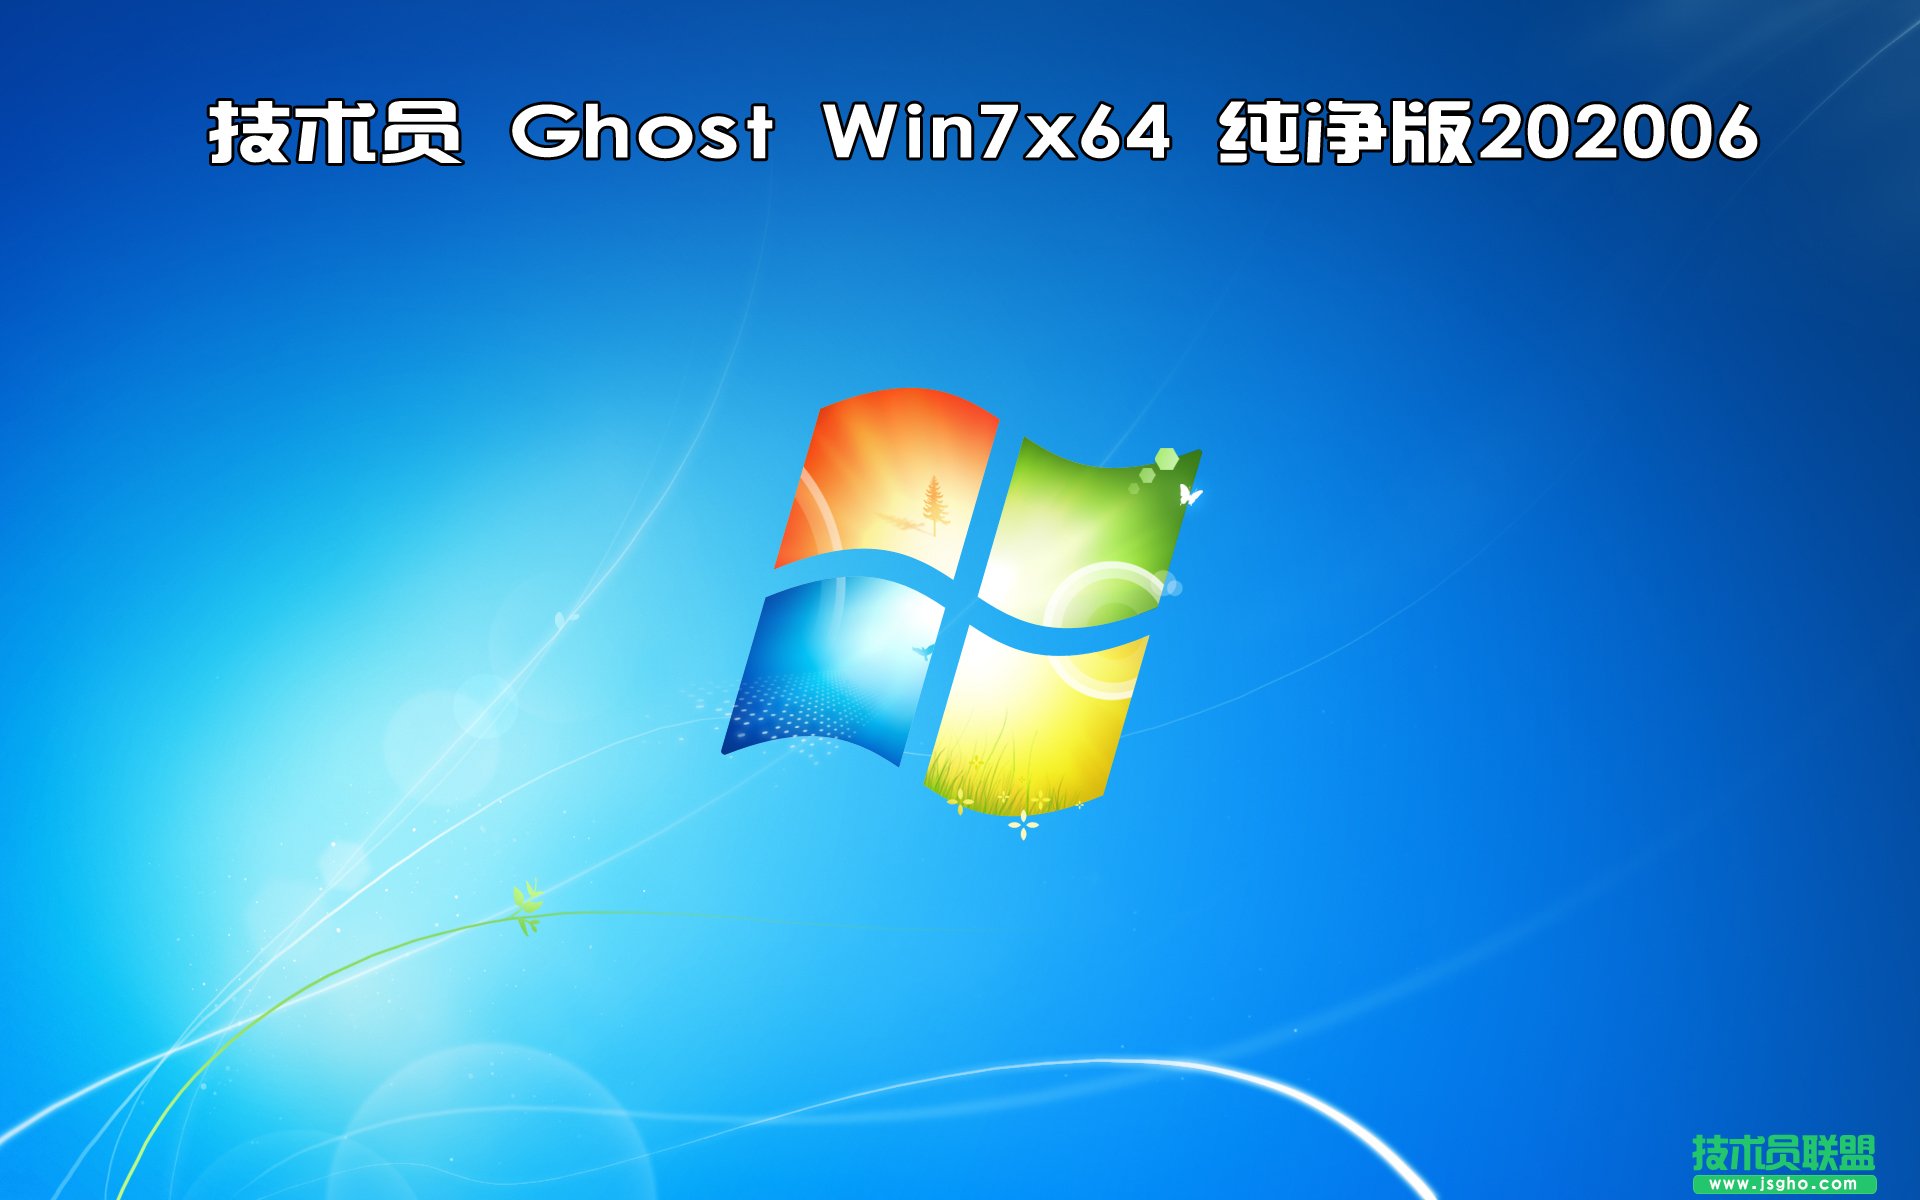 技术员 Ghost Win7 Sp1 x64 纯净版 2020 06